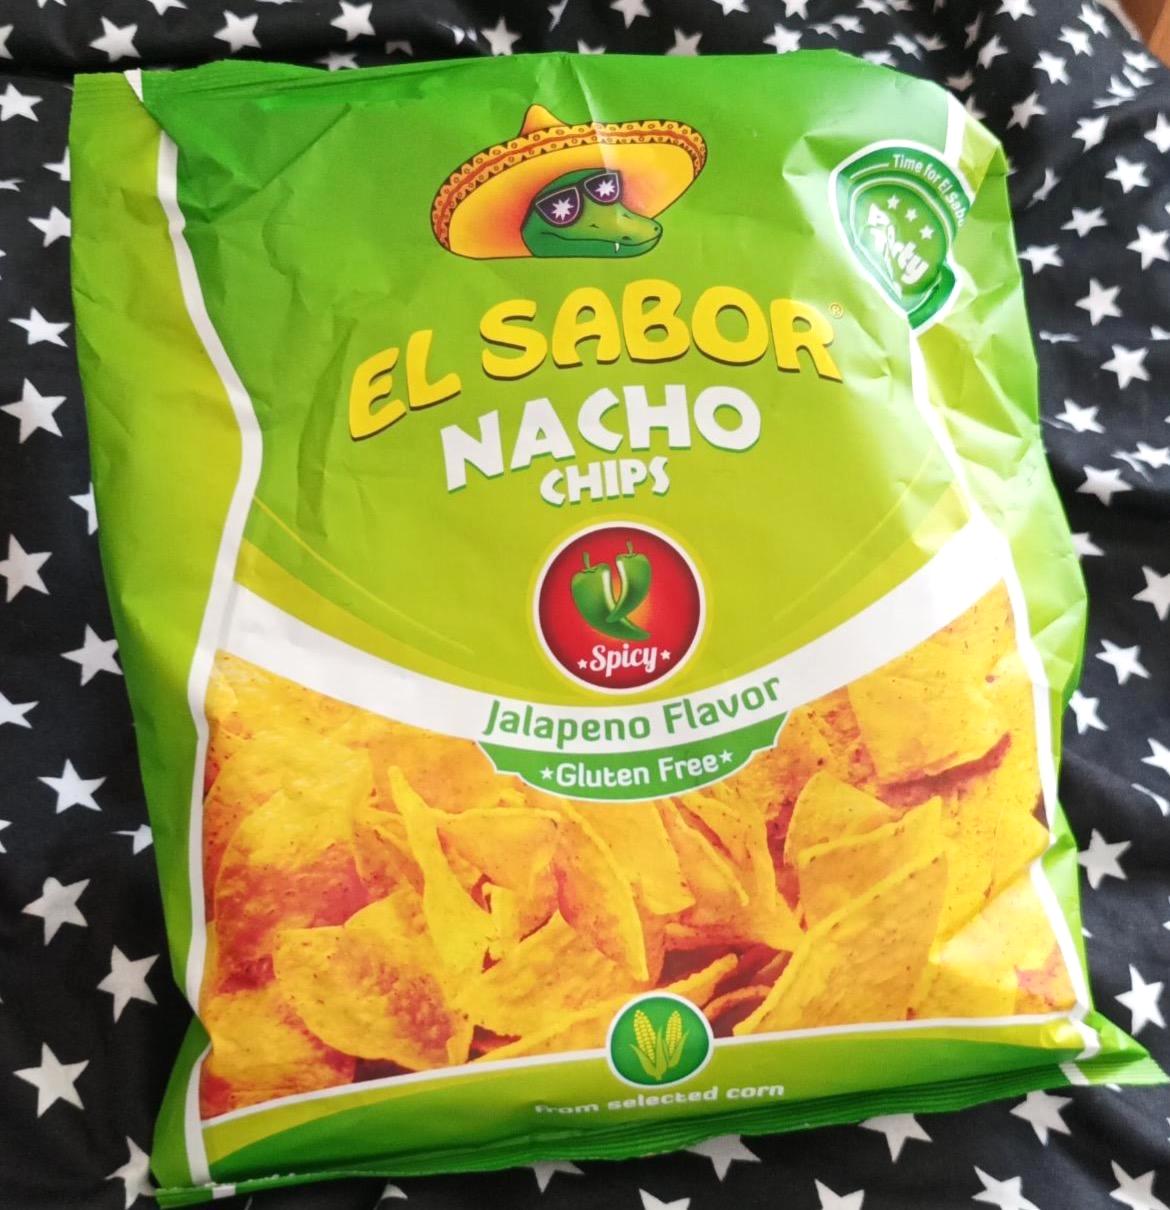 Képek - Nacho Chips Jalapenho flavour El Sabor